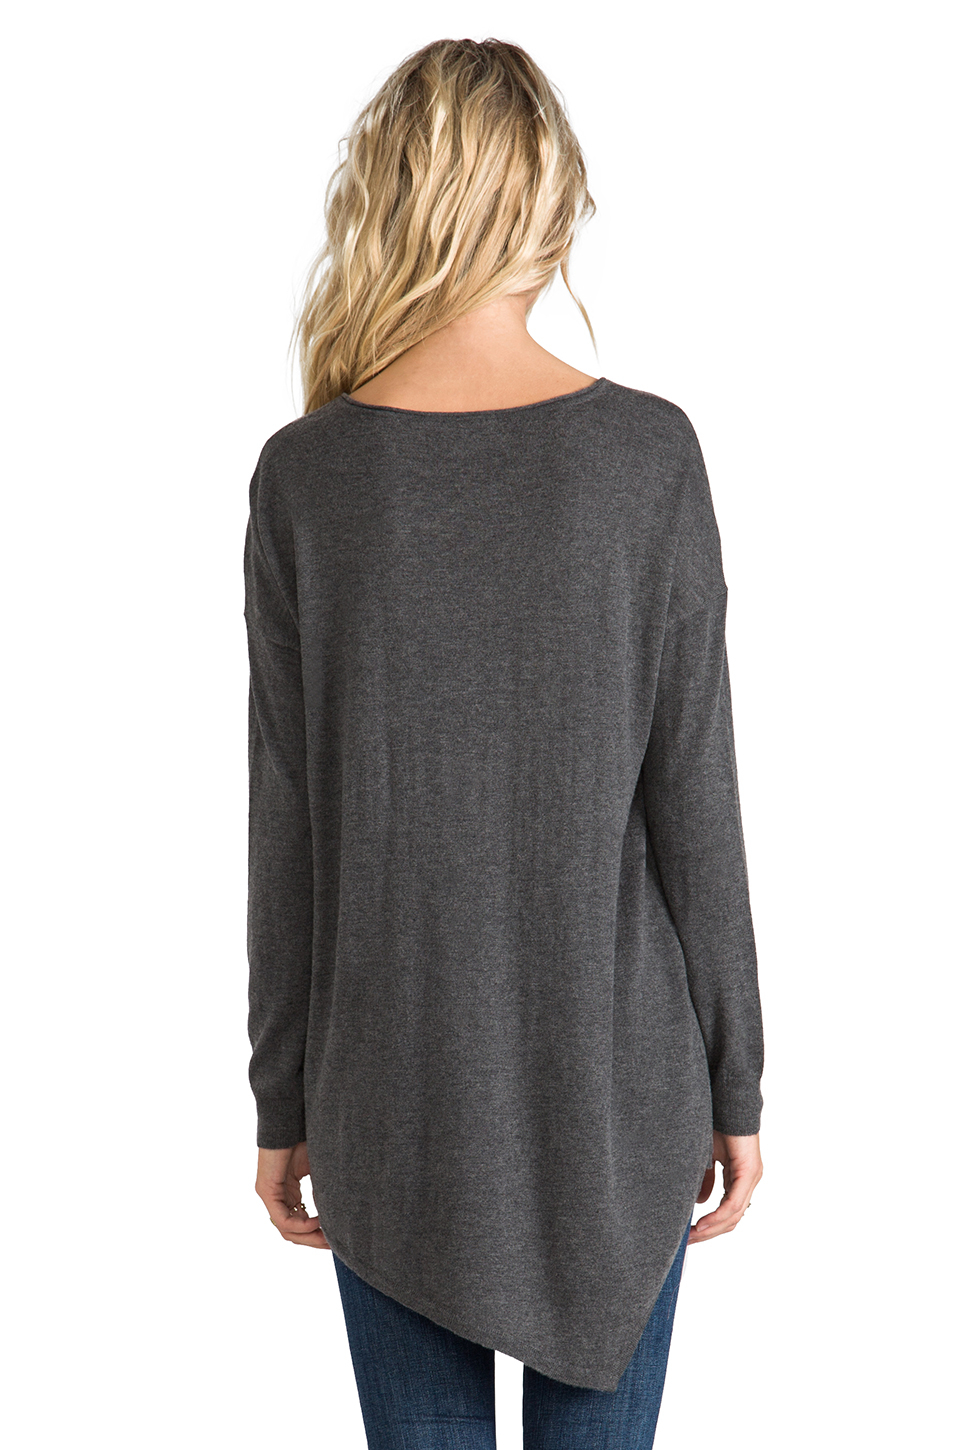 Lyst - Joie Armelio Sweater in Gray in Gray